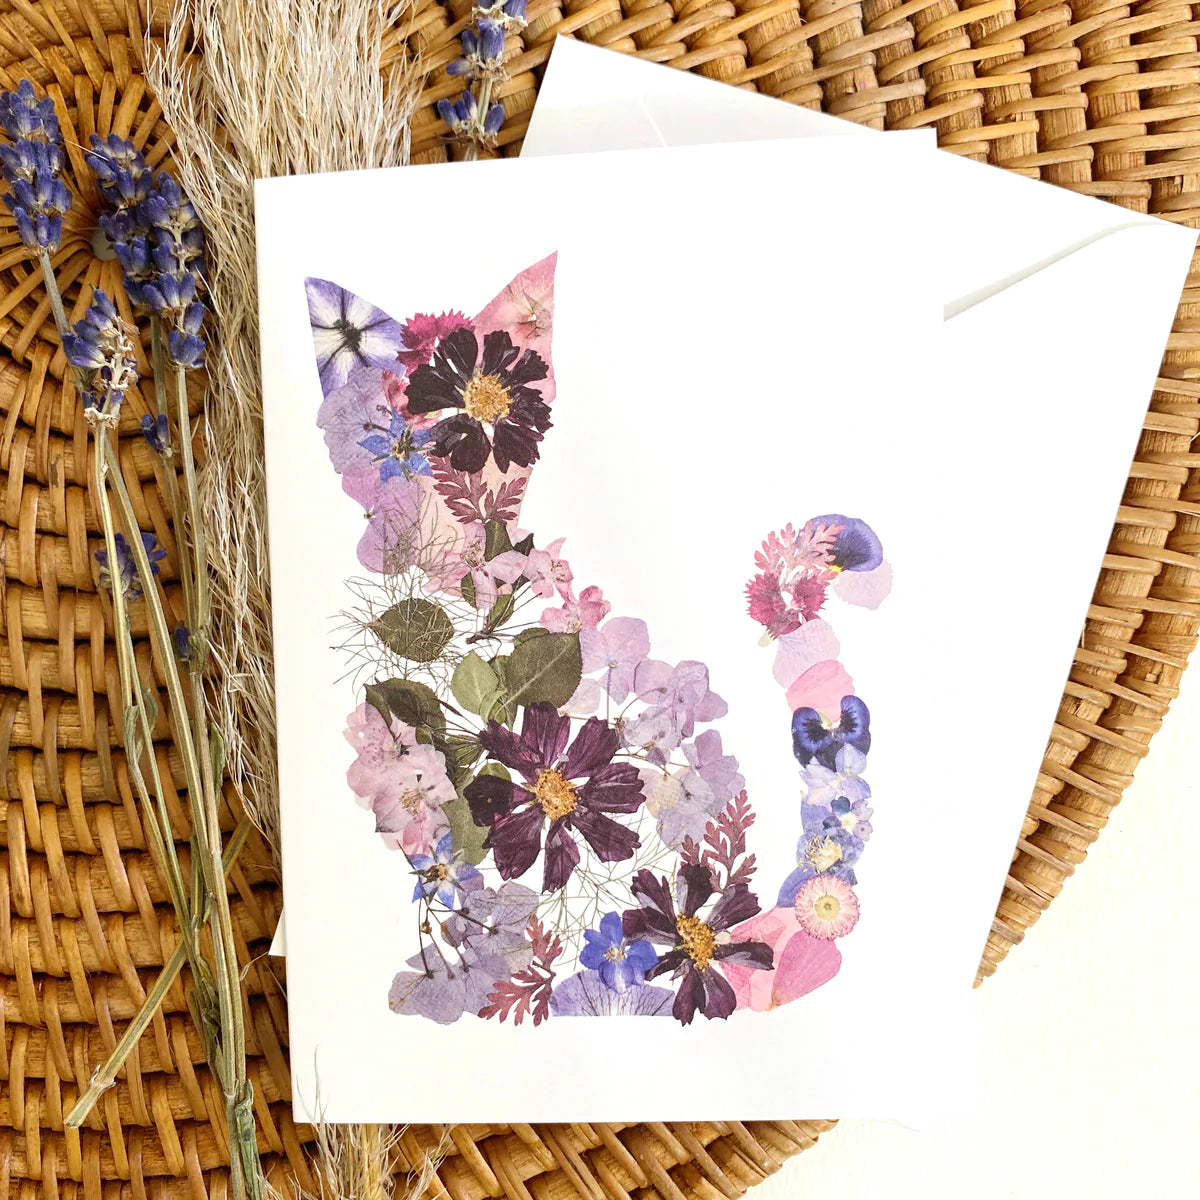 Cat Pressed Flower Art Greeting Card